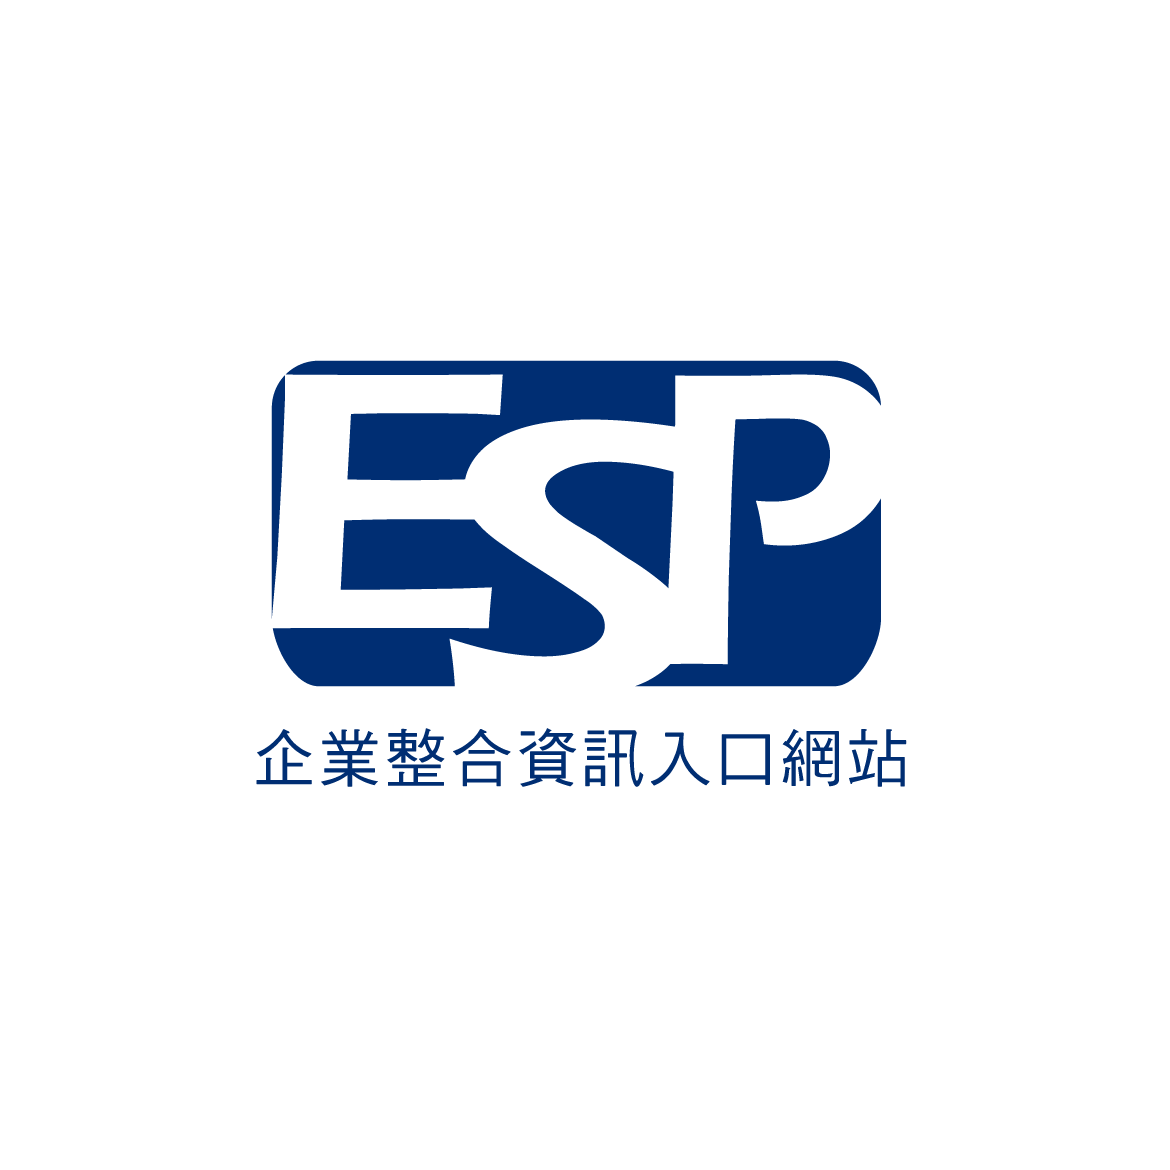 ESP新世代企業整合資訊入口網站